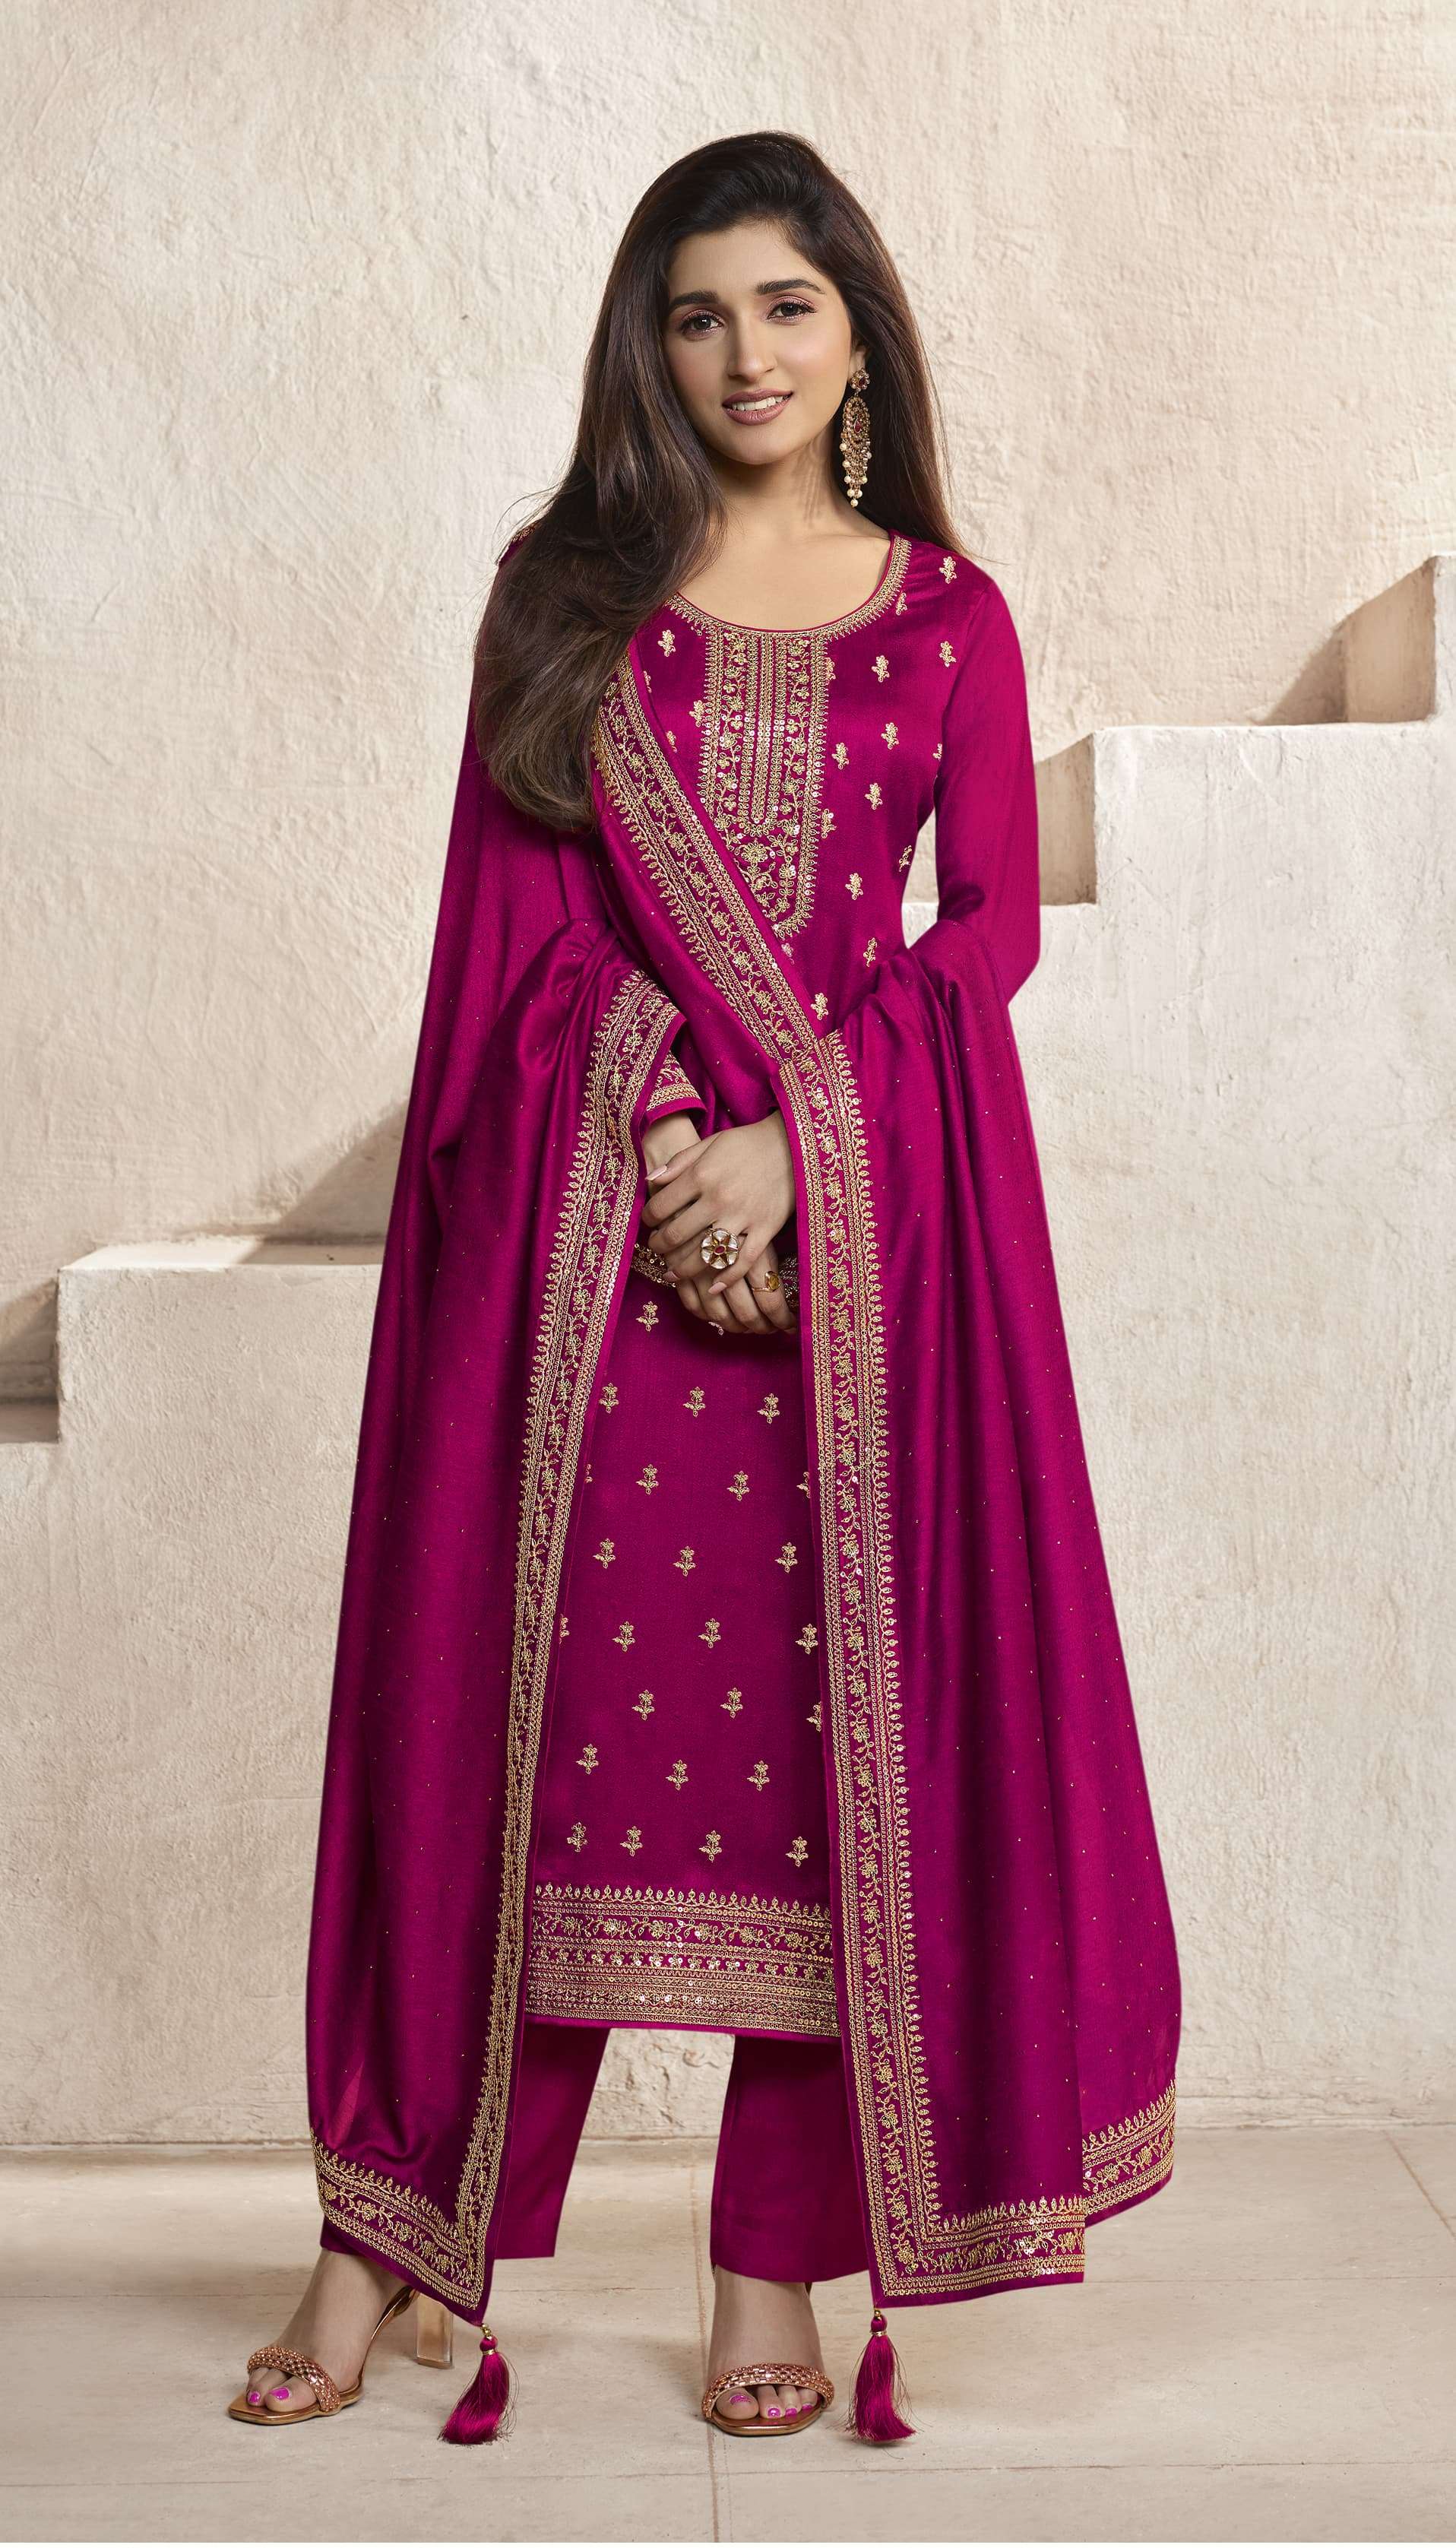 vinay fashion aanchal hitlist 64591-64595 series latest festive wear salwar kameez wholesaler surat gujarat